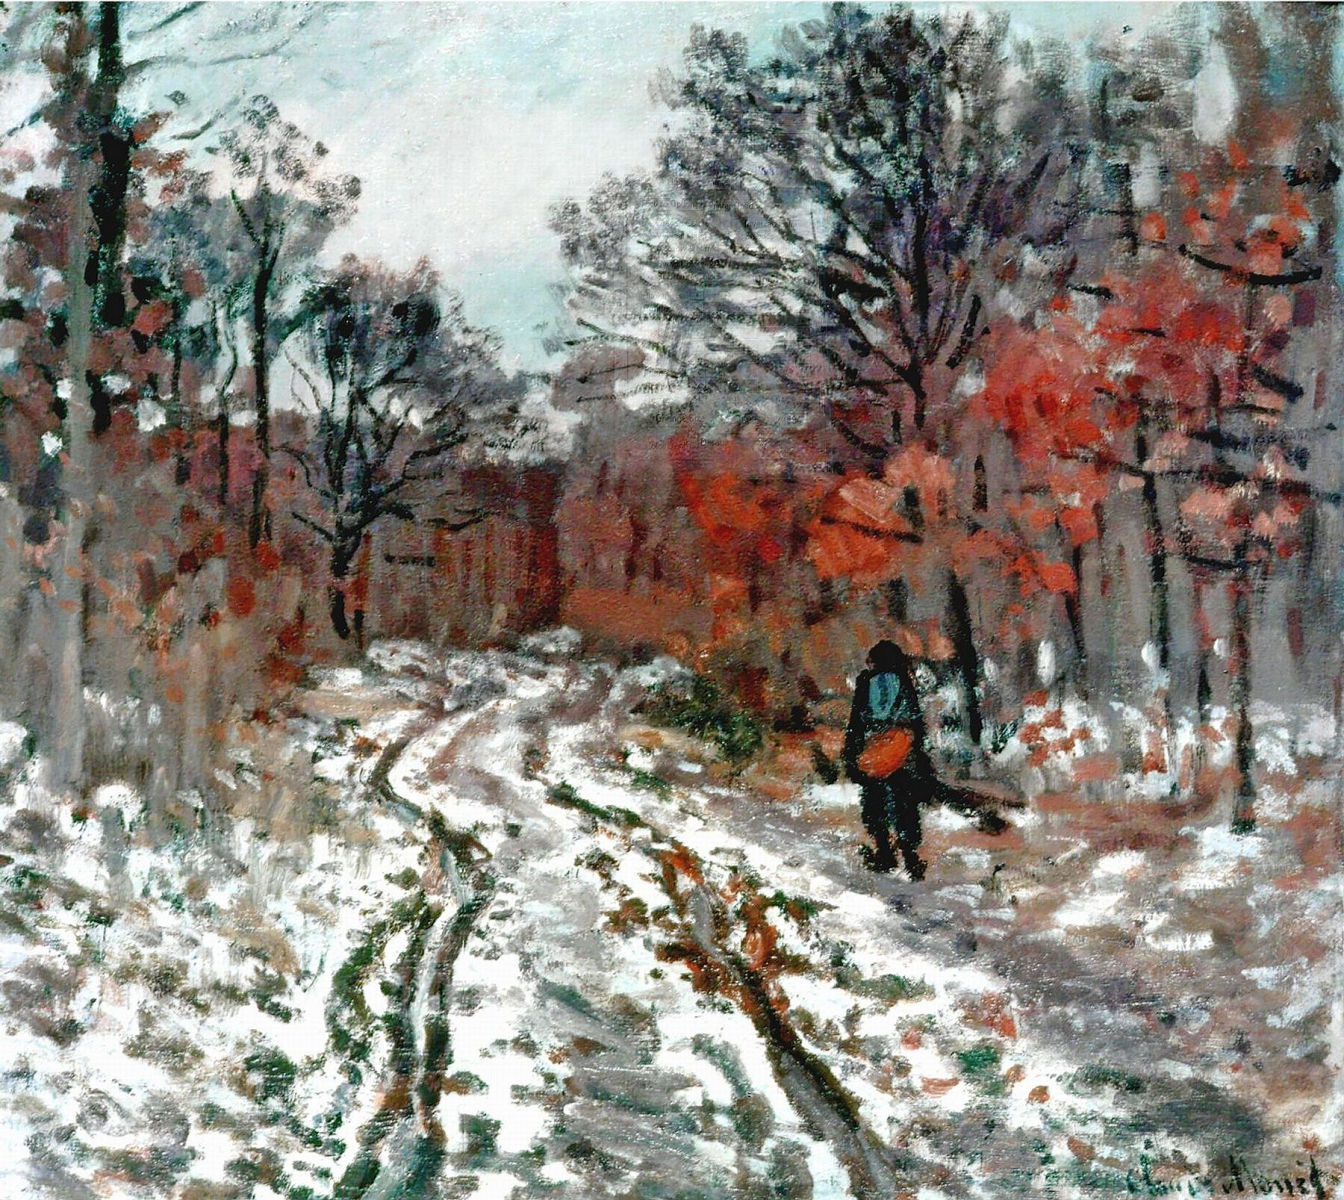 Claude+Monet-1840-1926 (569).jpg